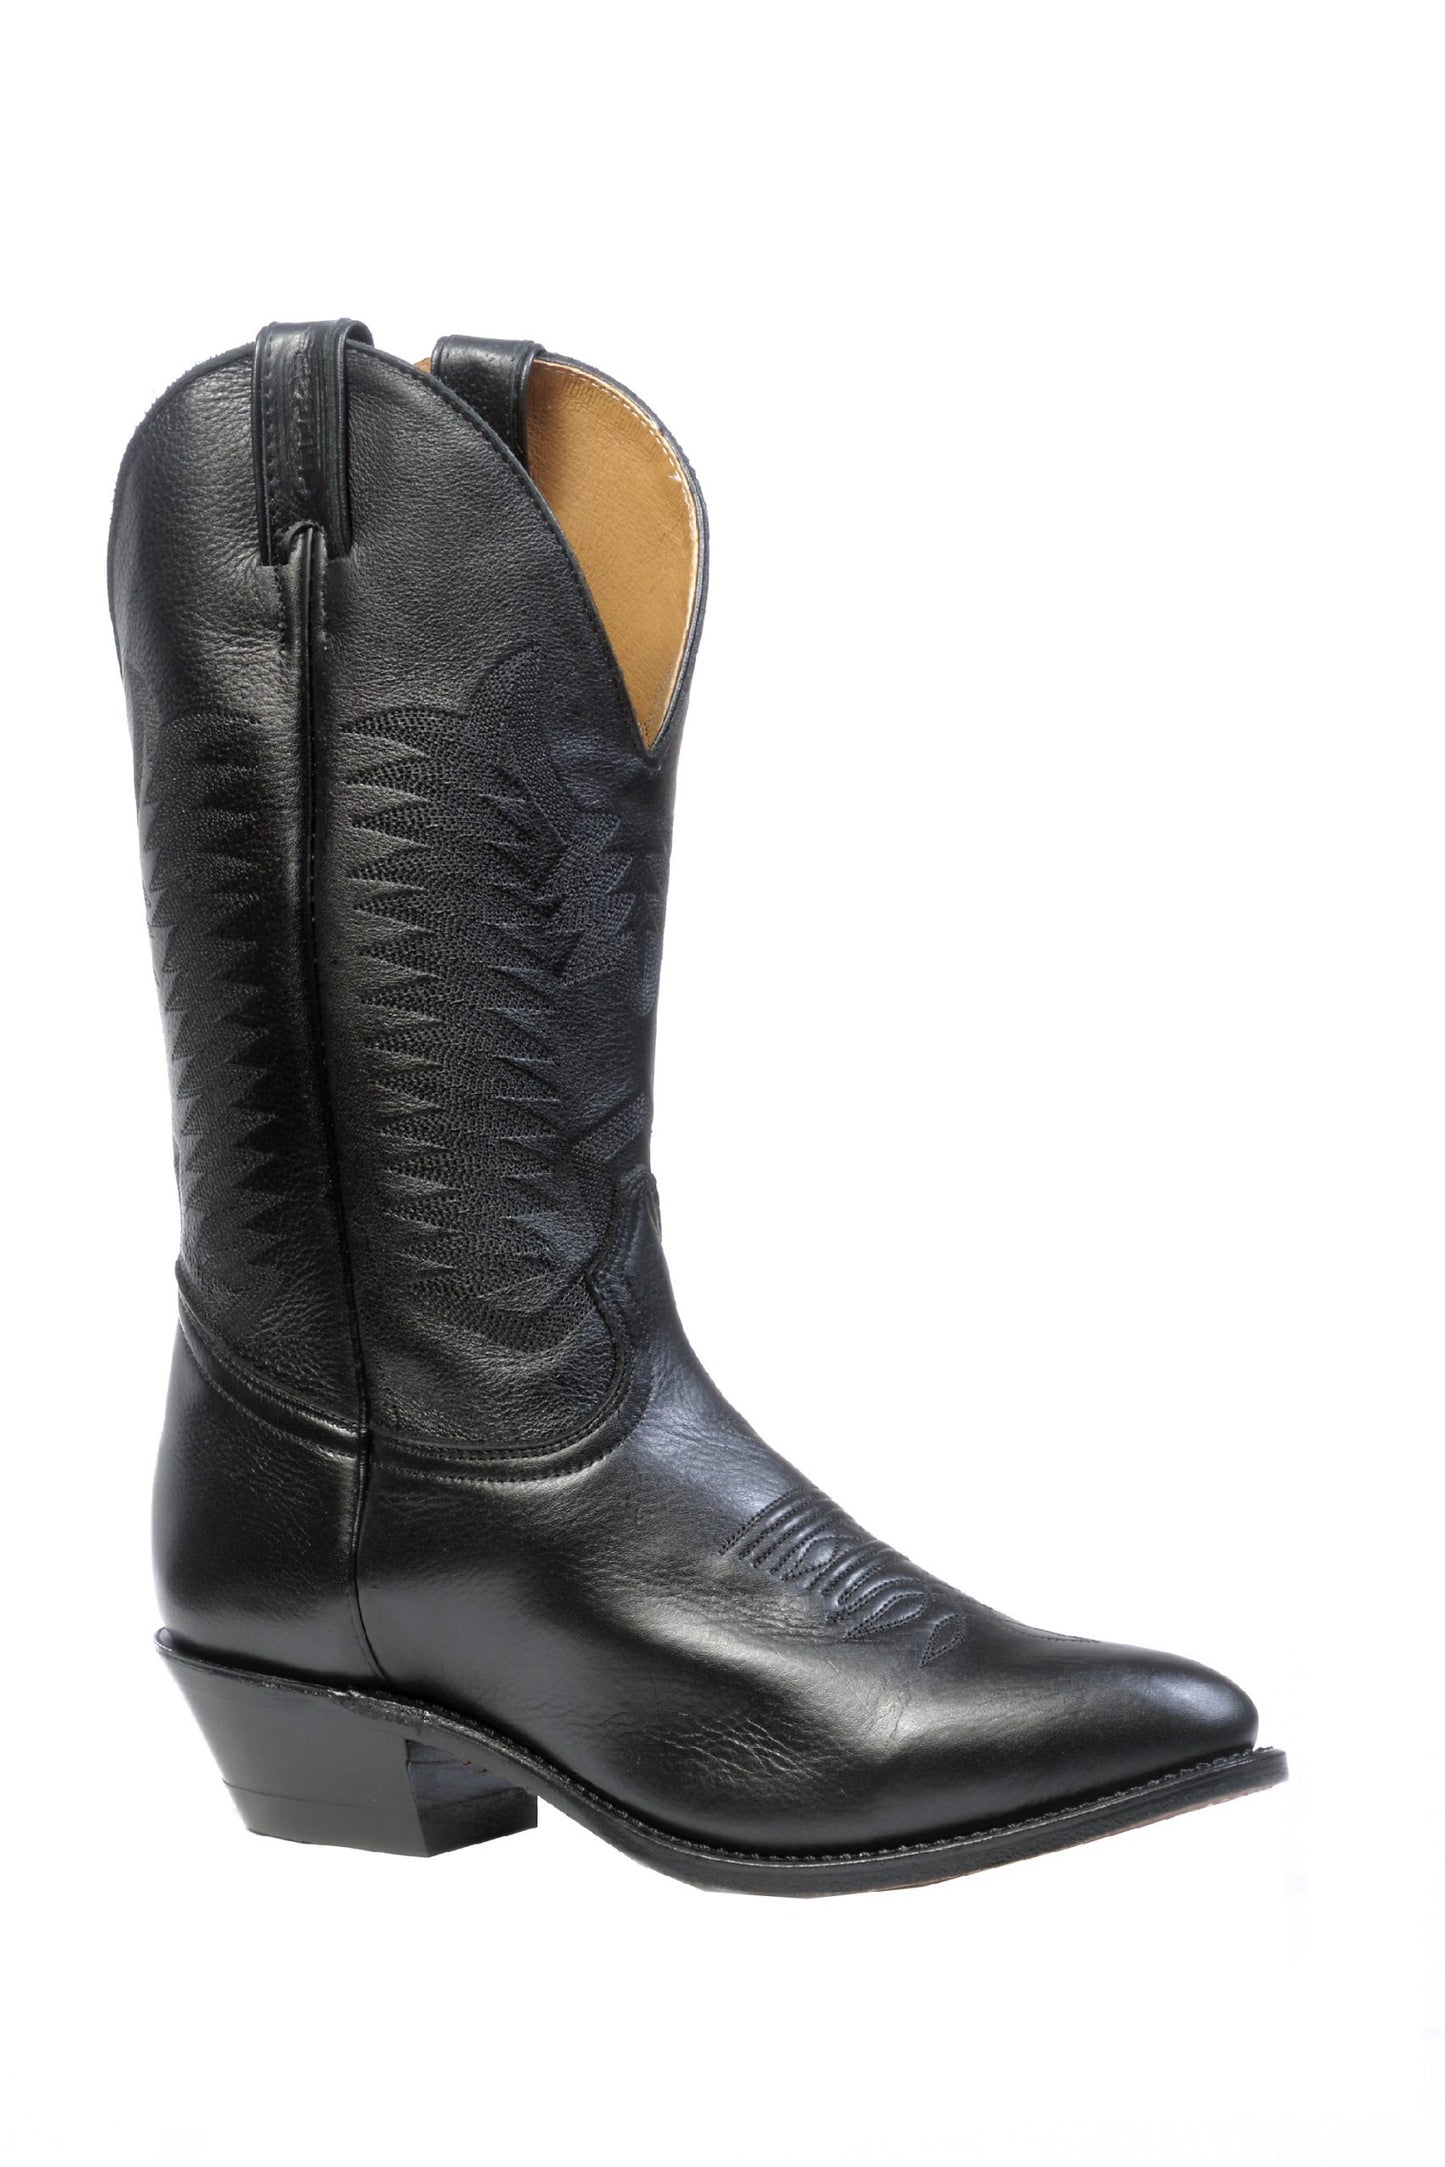 Boot Men's (9502) - 13" Medium Cowboy in Sporty Black